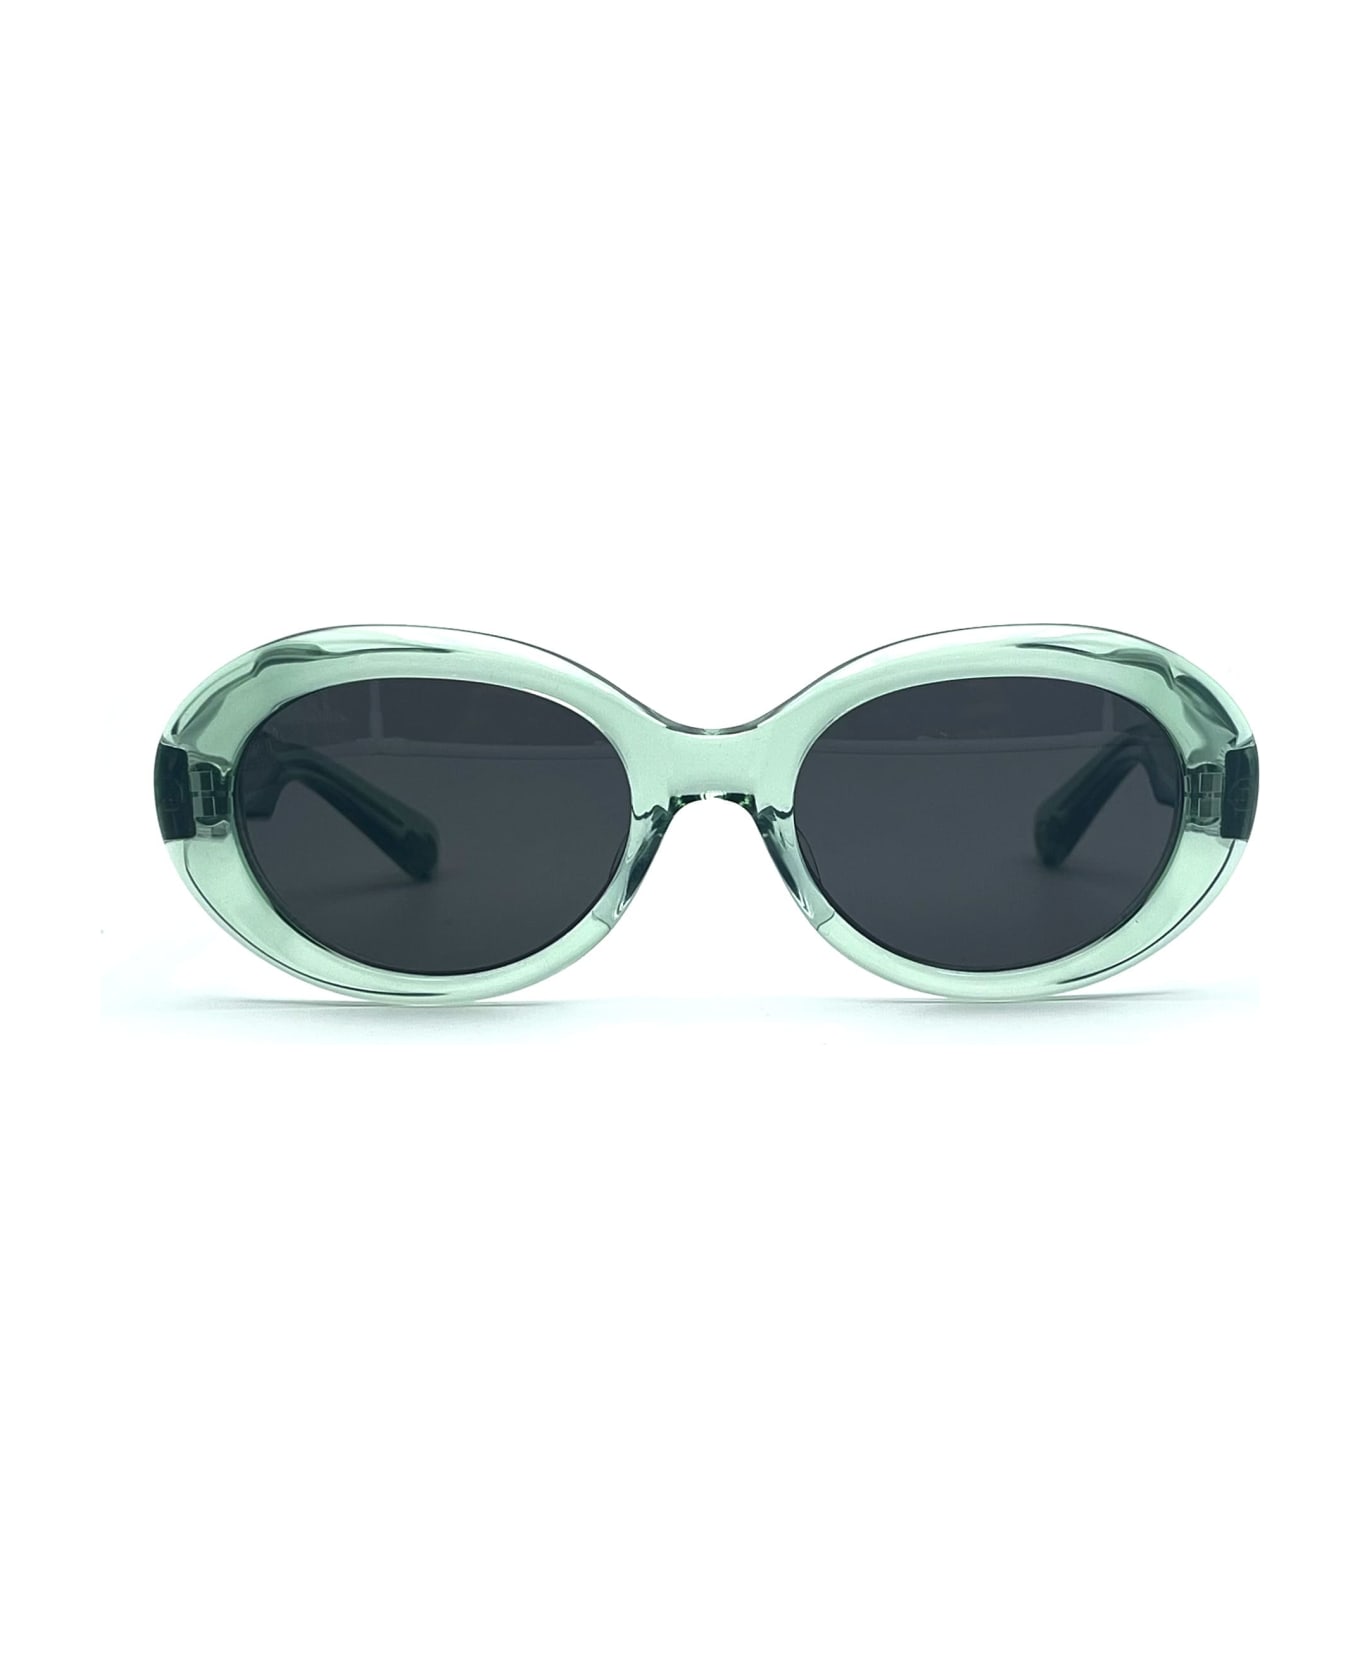 Matsuda M1034 - Mint Sunglasses - mint green